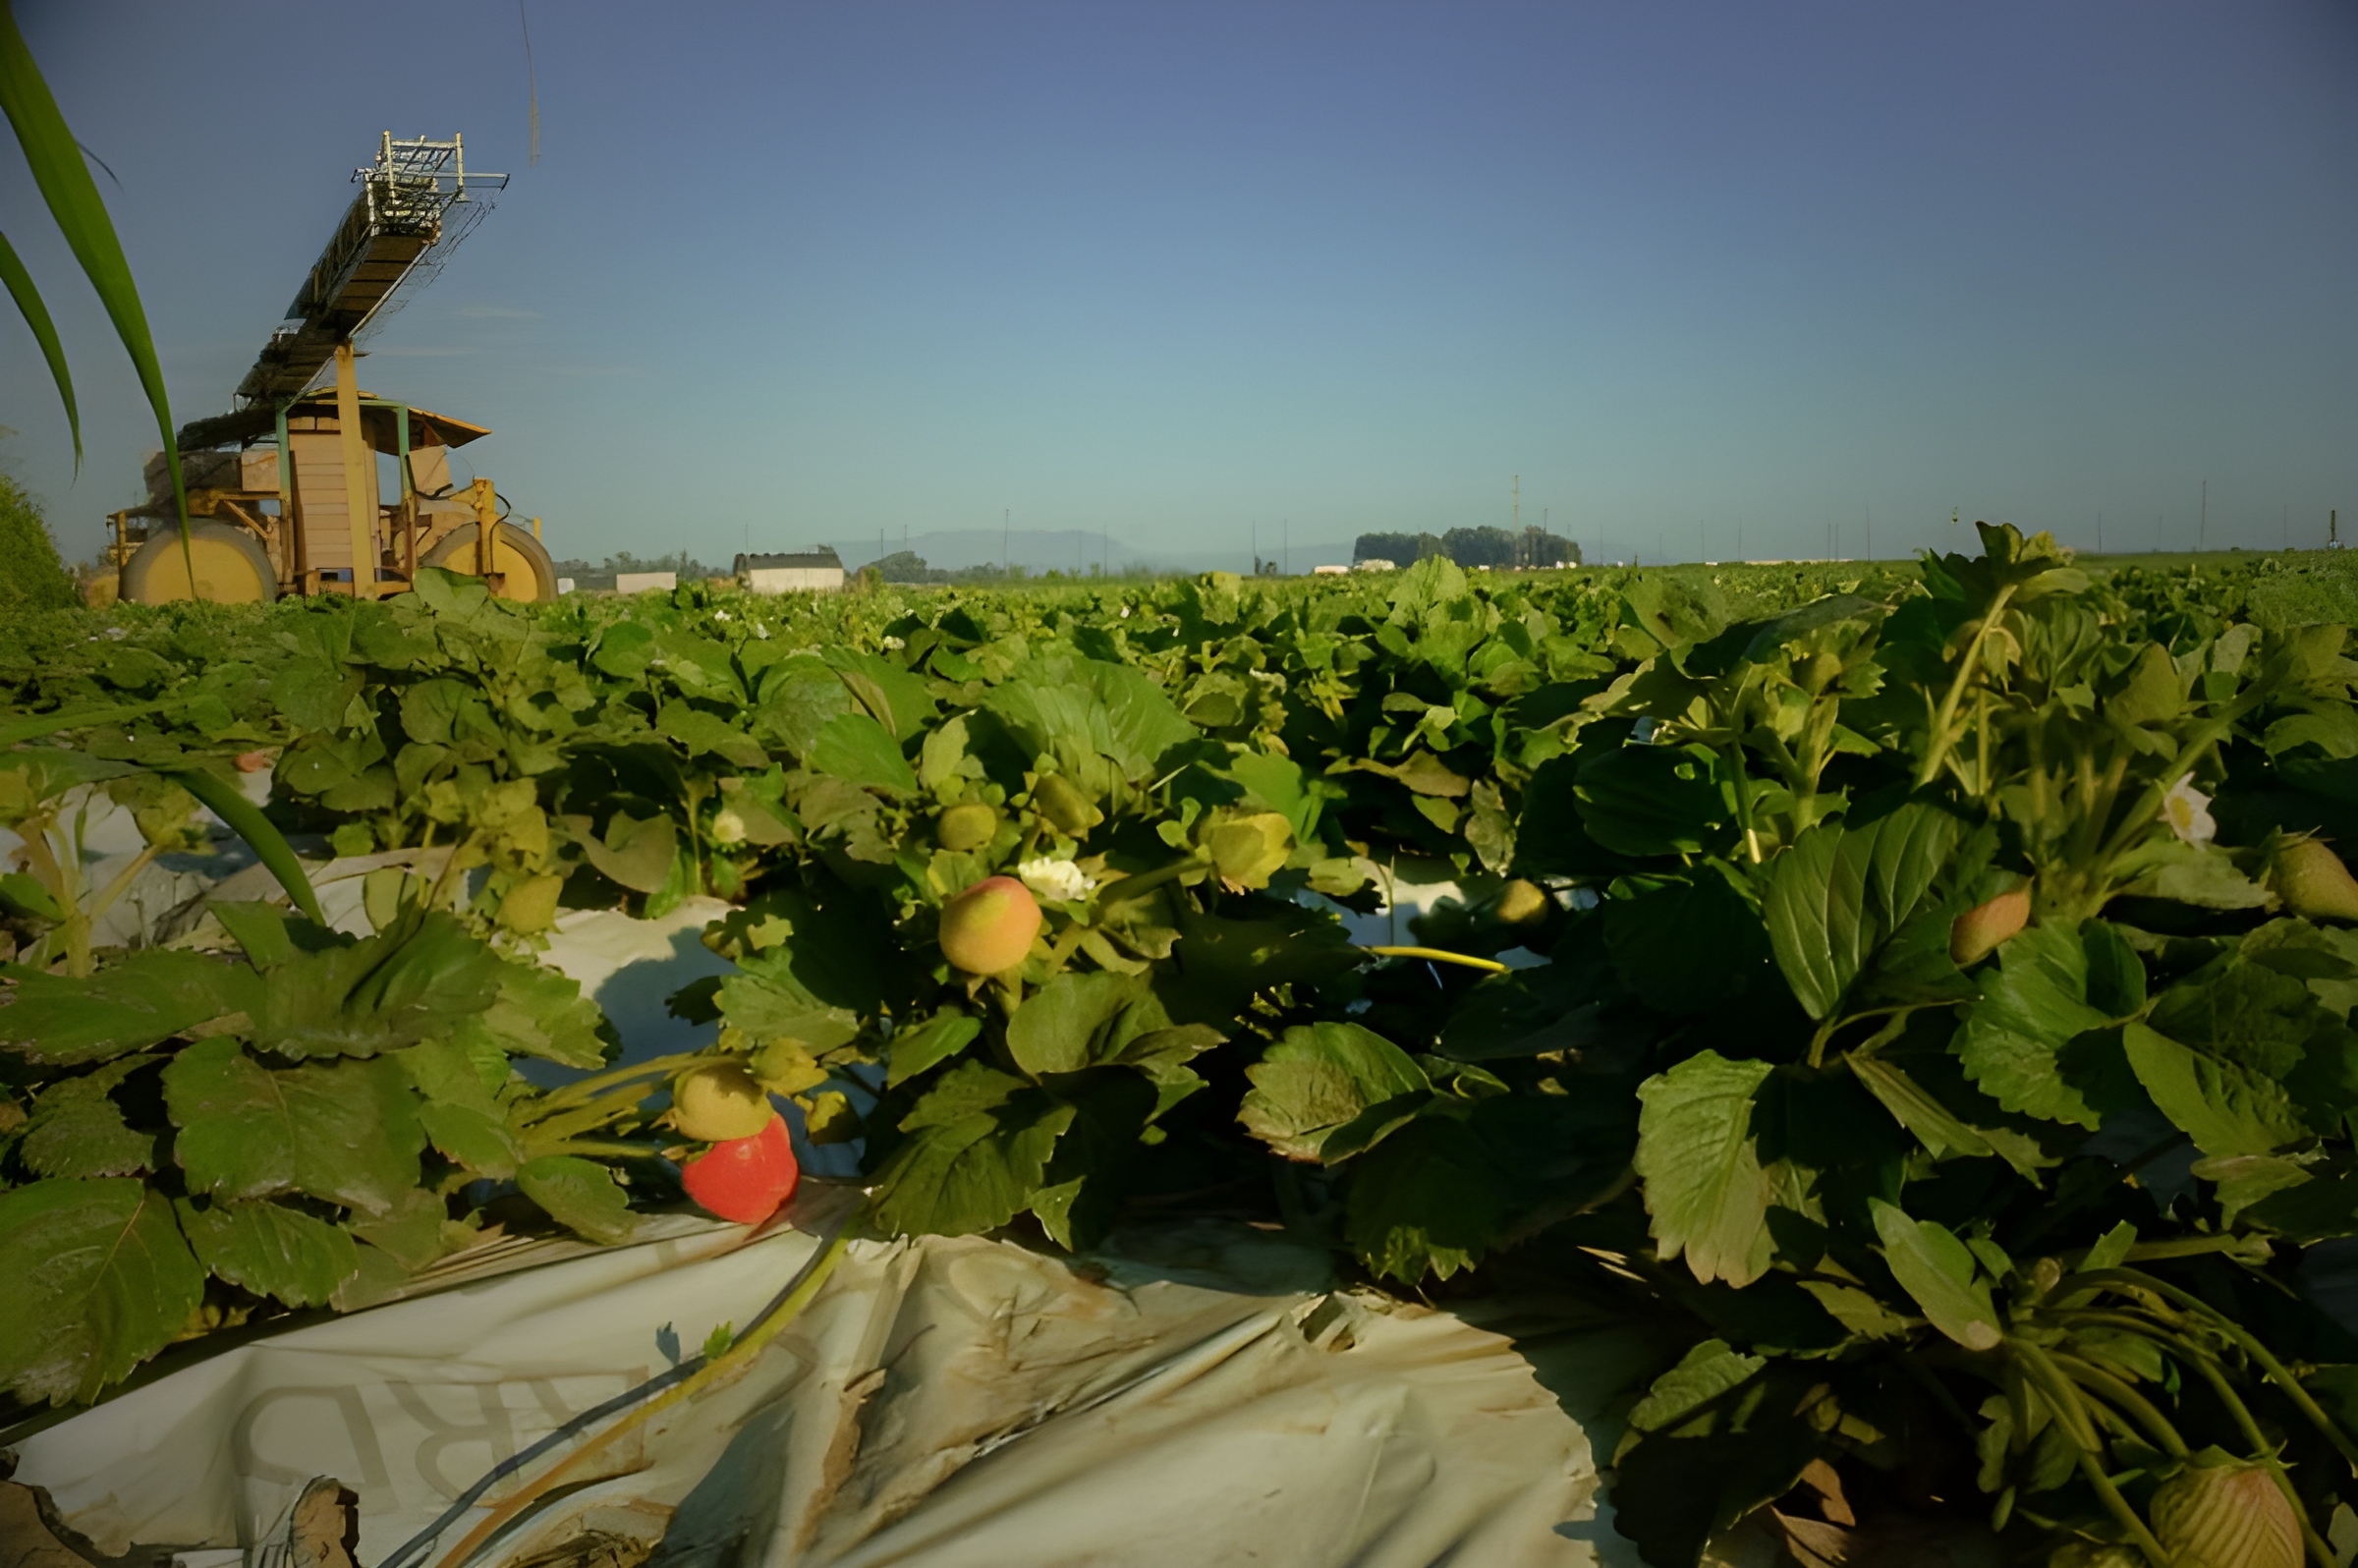 ¿Alertas virtuales podrán reducir peligros de pesticidas en campos de California?